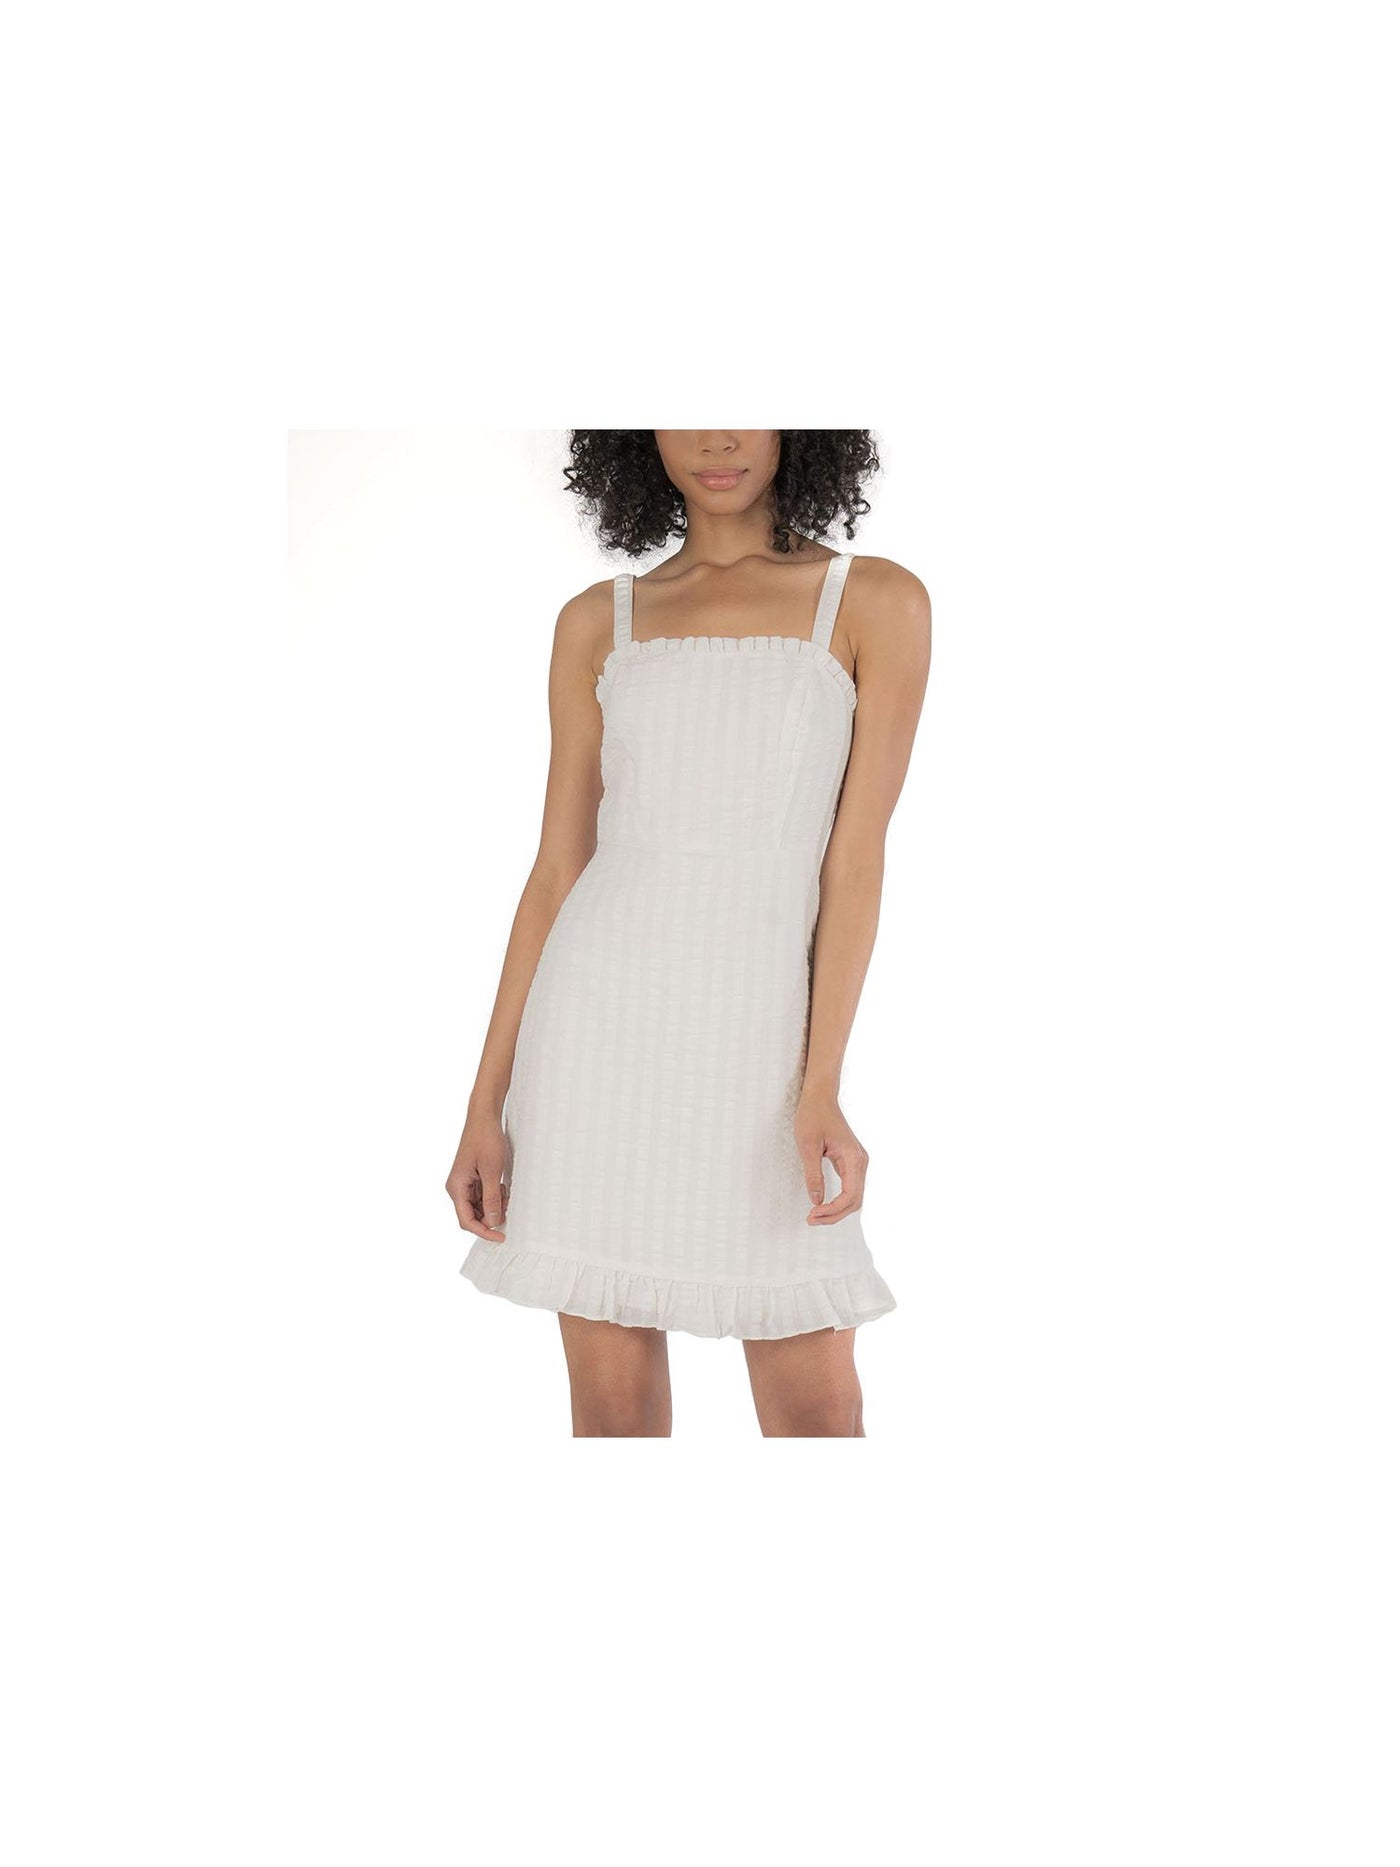 SPEECHLESS Womens Ivory Striped Sleeveless Square Neck Short Fit + Flare Dress Juniors XL